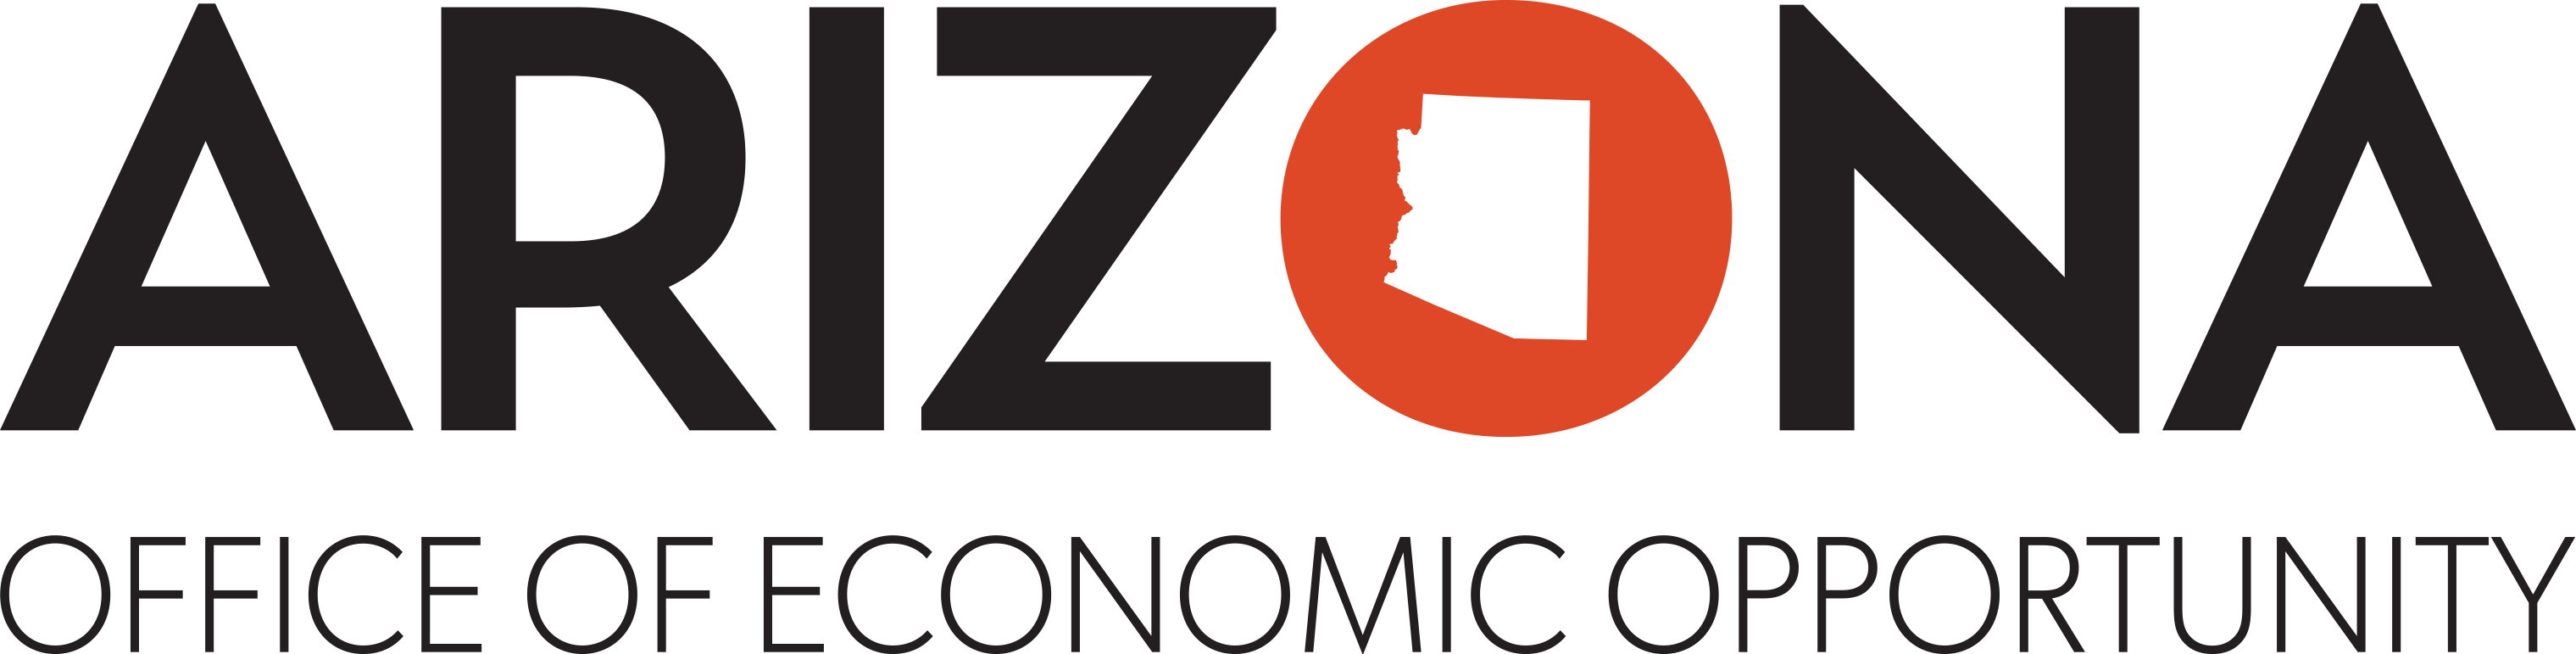 Arizona Office of Economic Opportunity logo